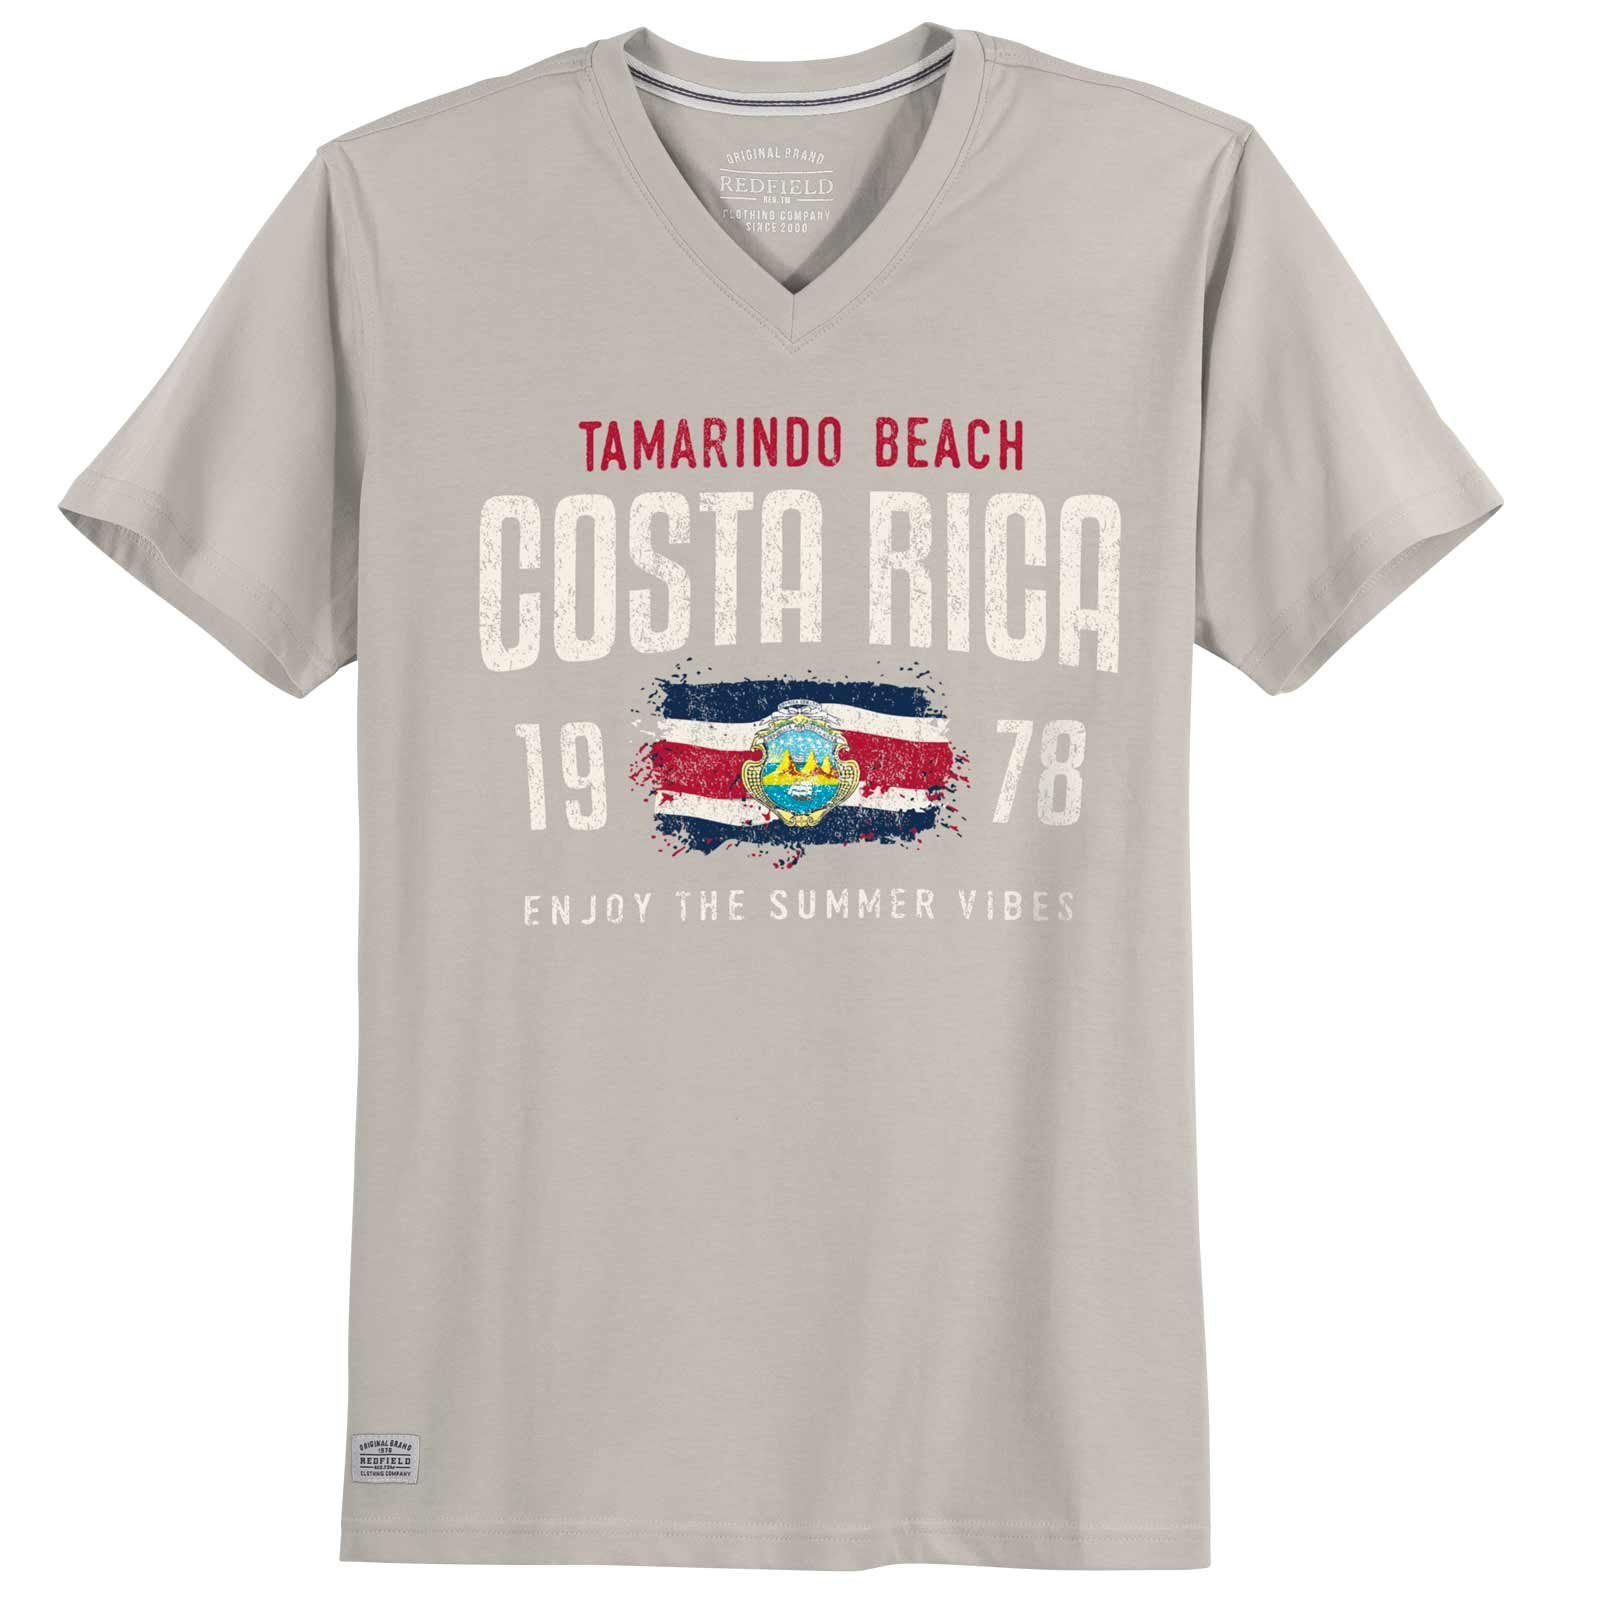 redfield Print-Shirt T-Shirt Herren Print grau Große Rica Größen V-Neck Redfield Costa